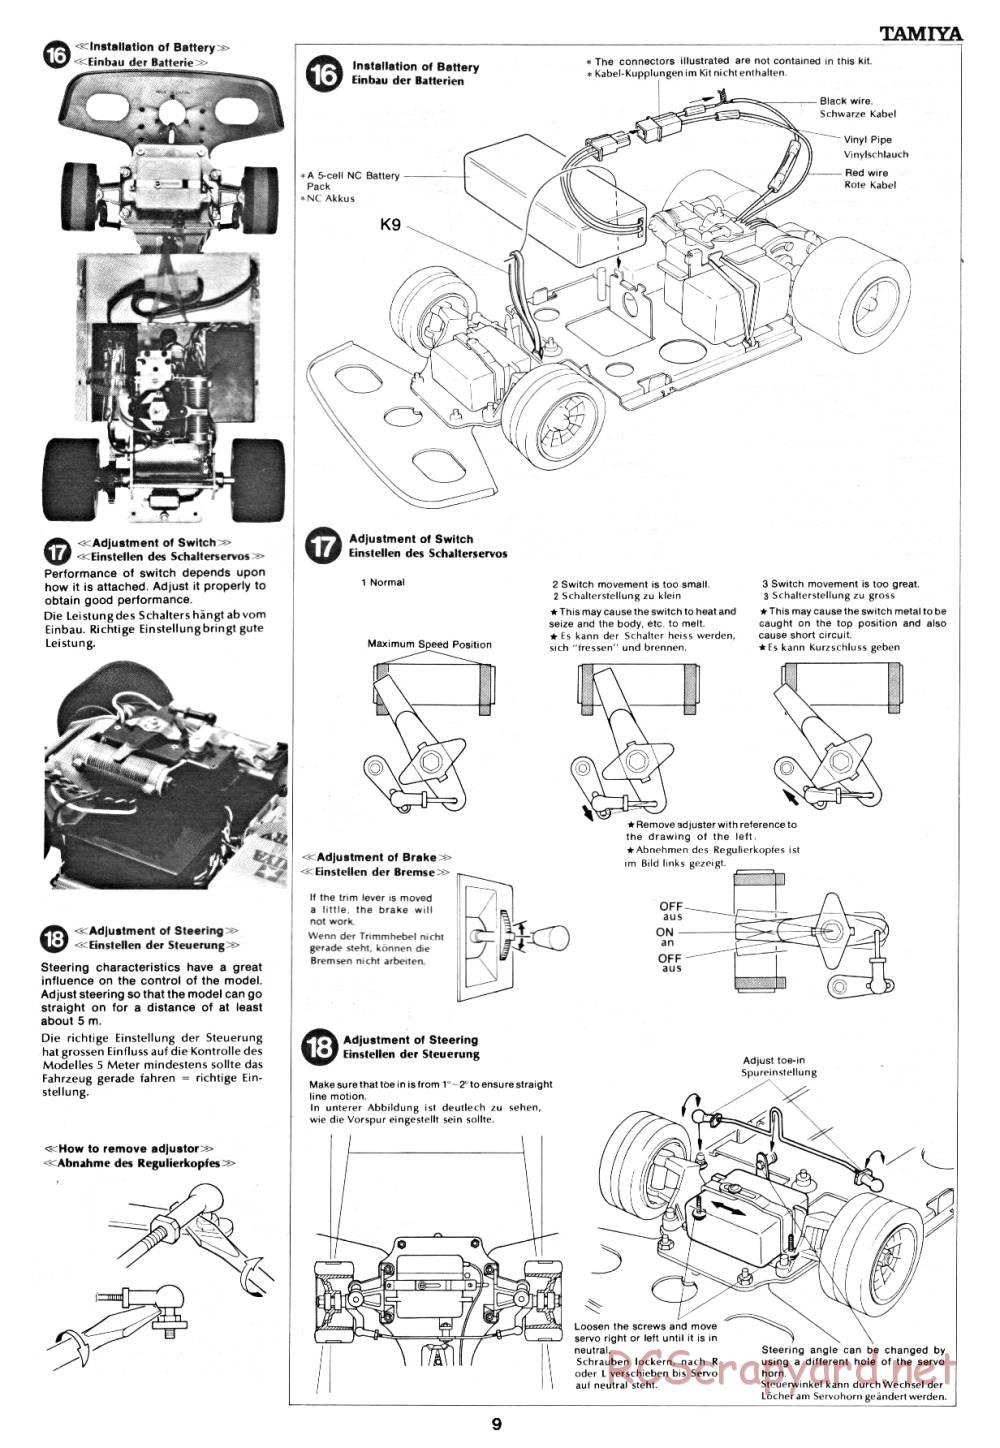 Tamiya - Toyota Celica LB Turbo Gr.5 (CS) - 58009 - Manual - Page 9